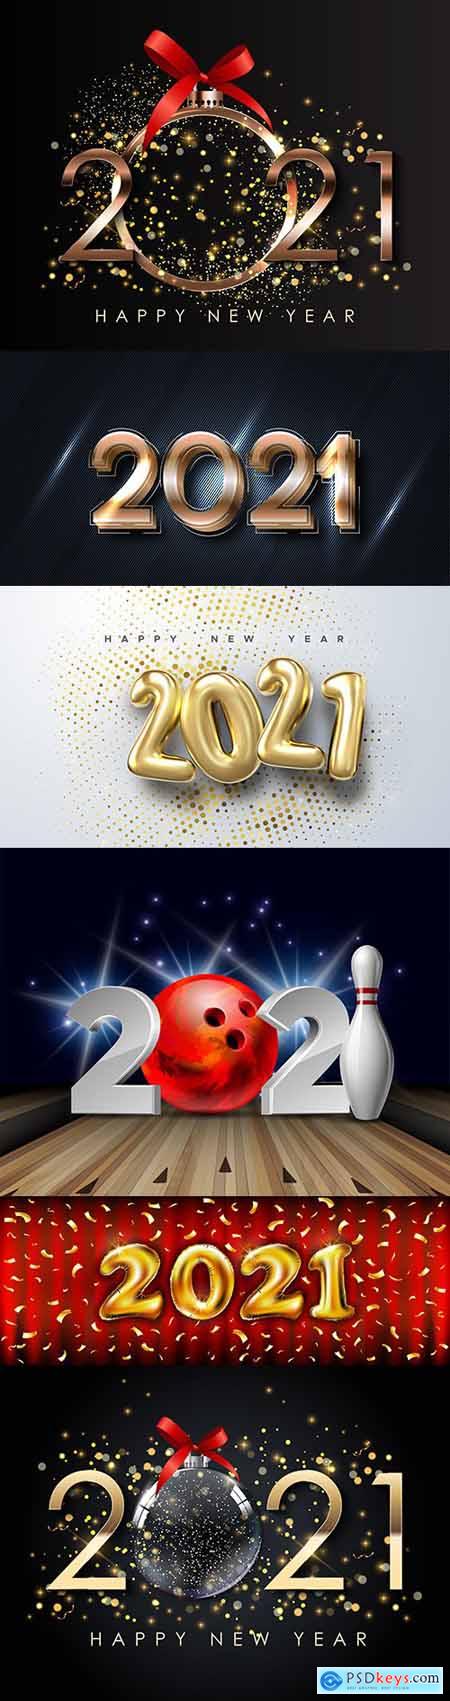 2021 New Years illustrations Festive design inscription